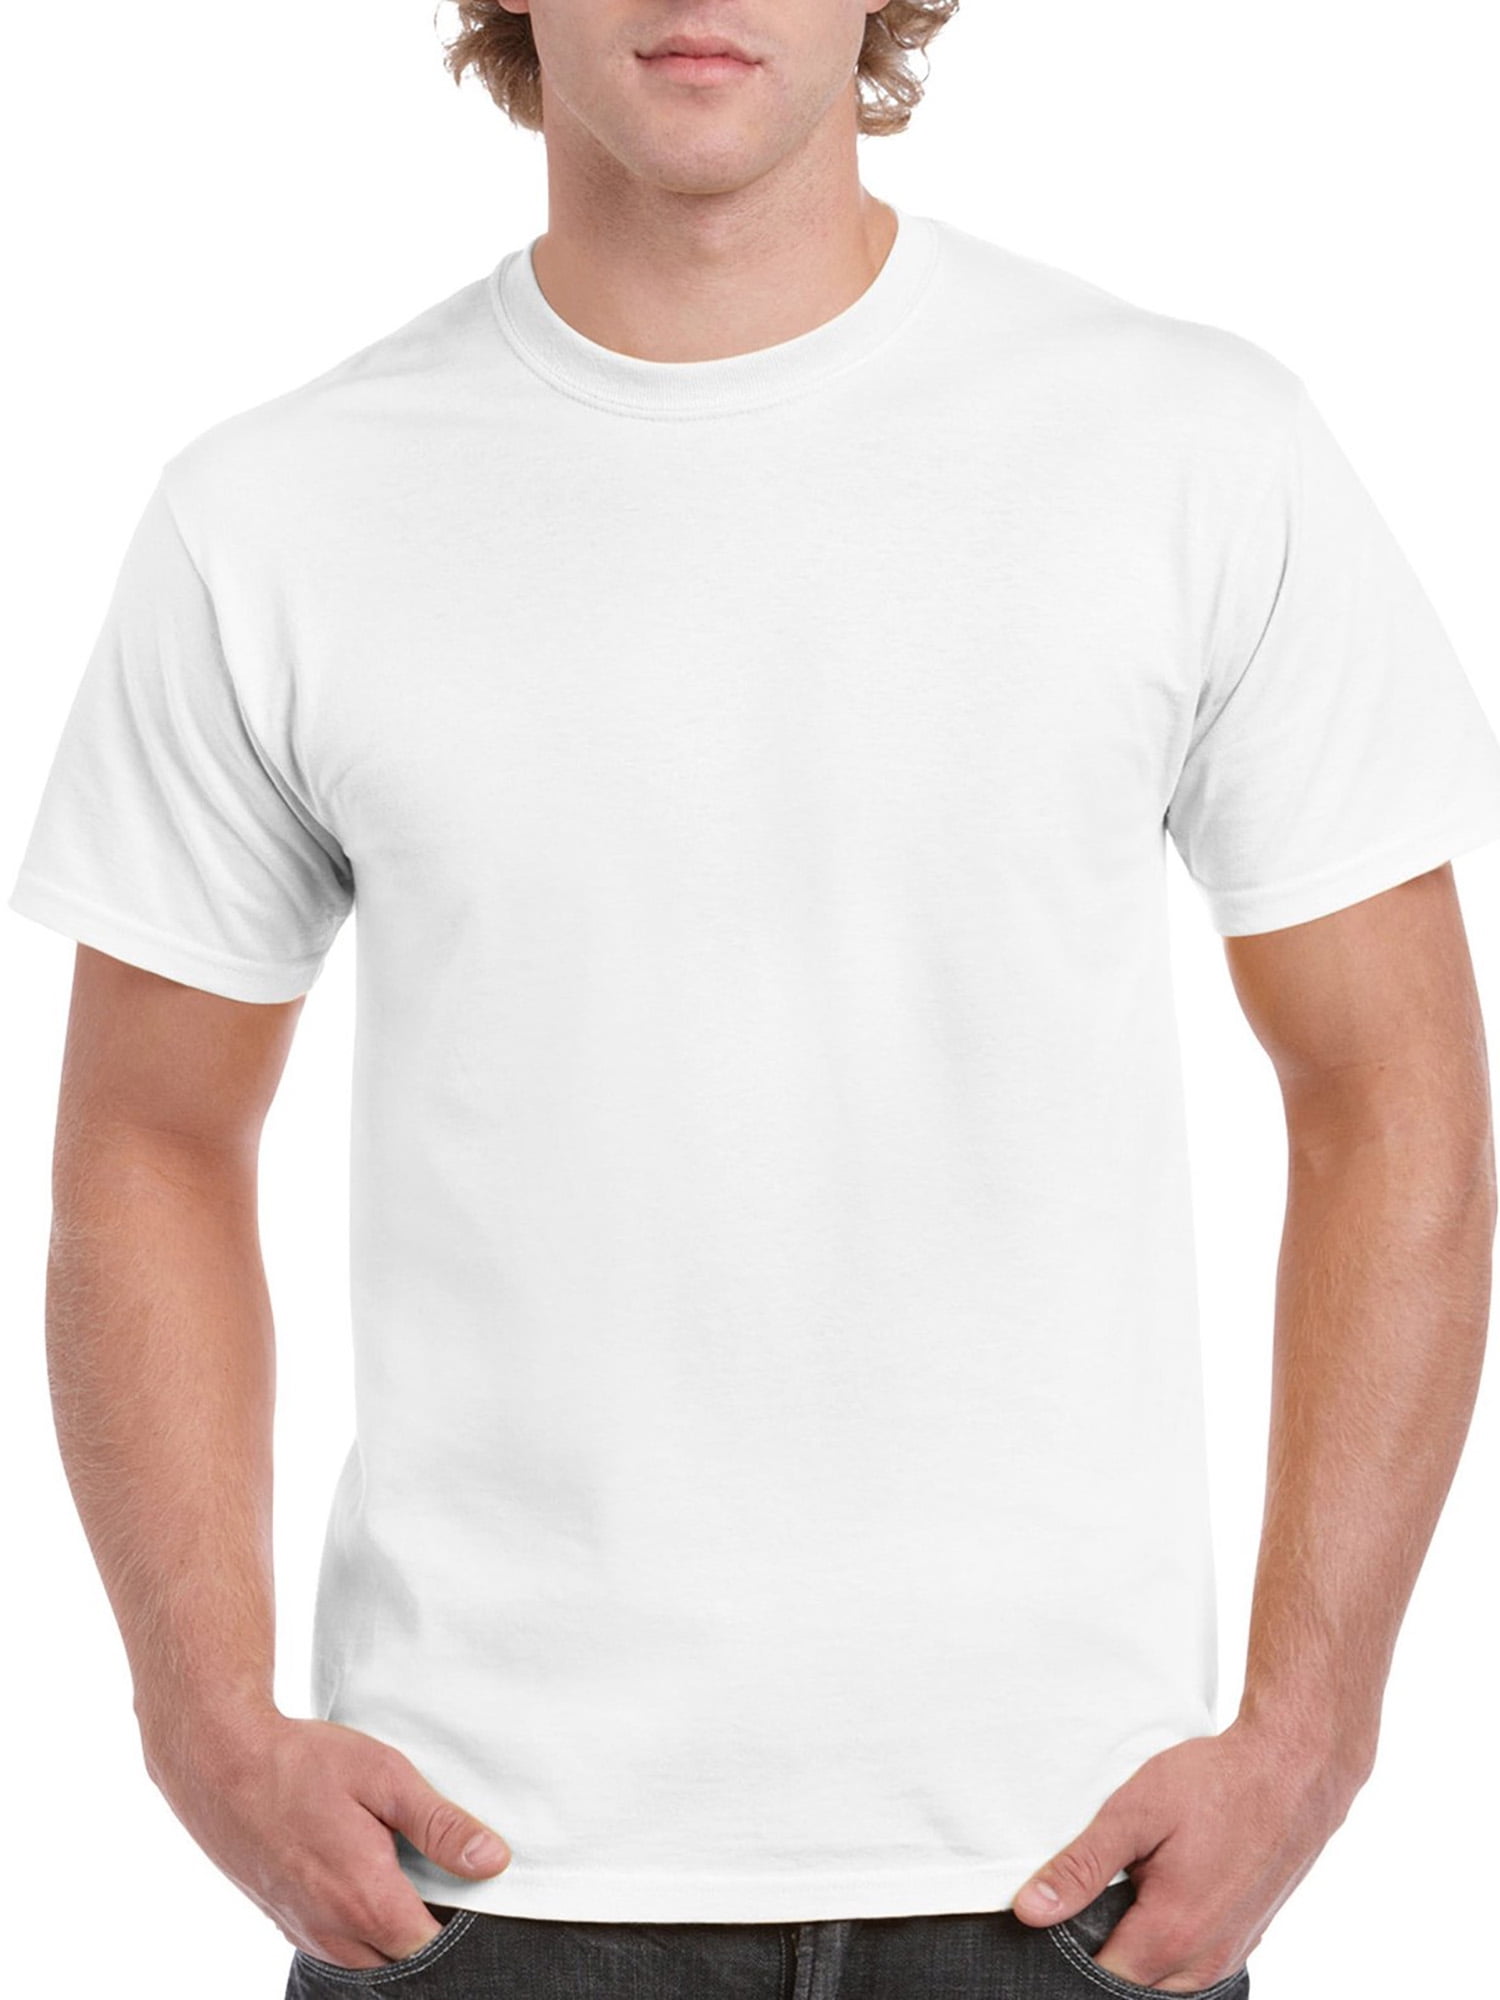 100%cotton Kids BOYS T-shirts Tops Shirts Costume tshirts gifts  6-14Y 